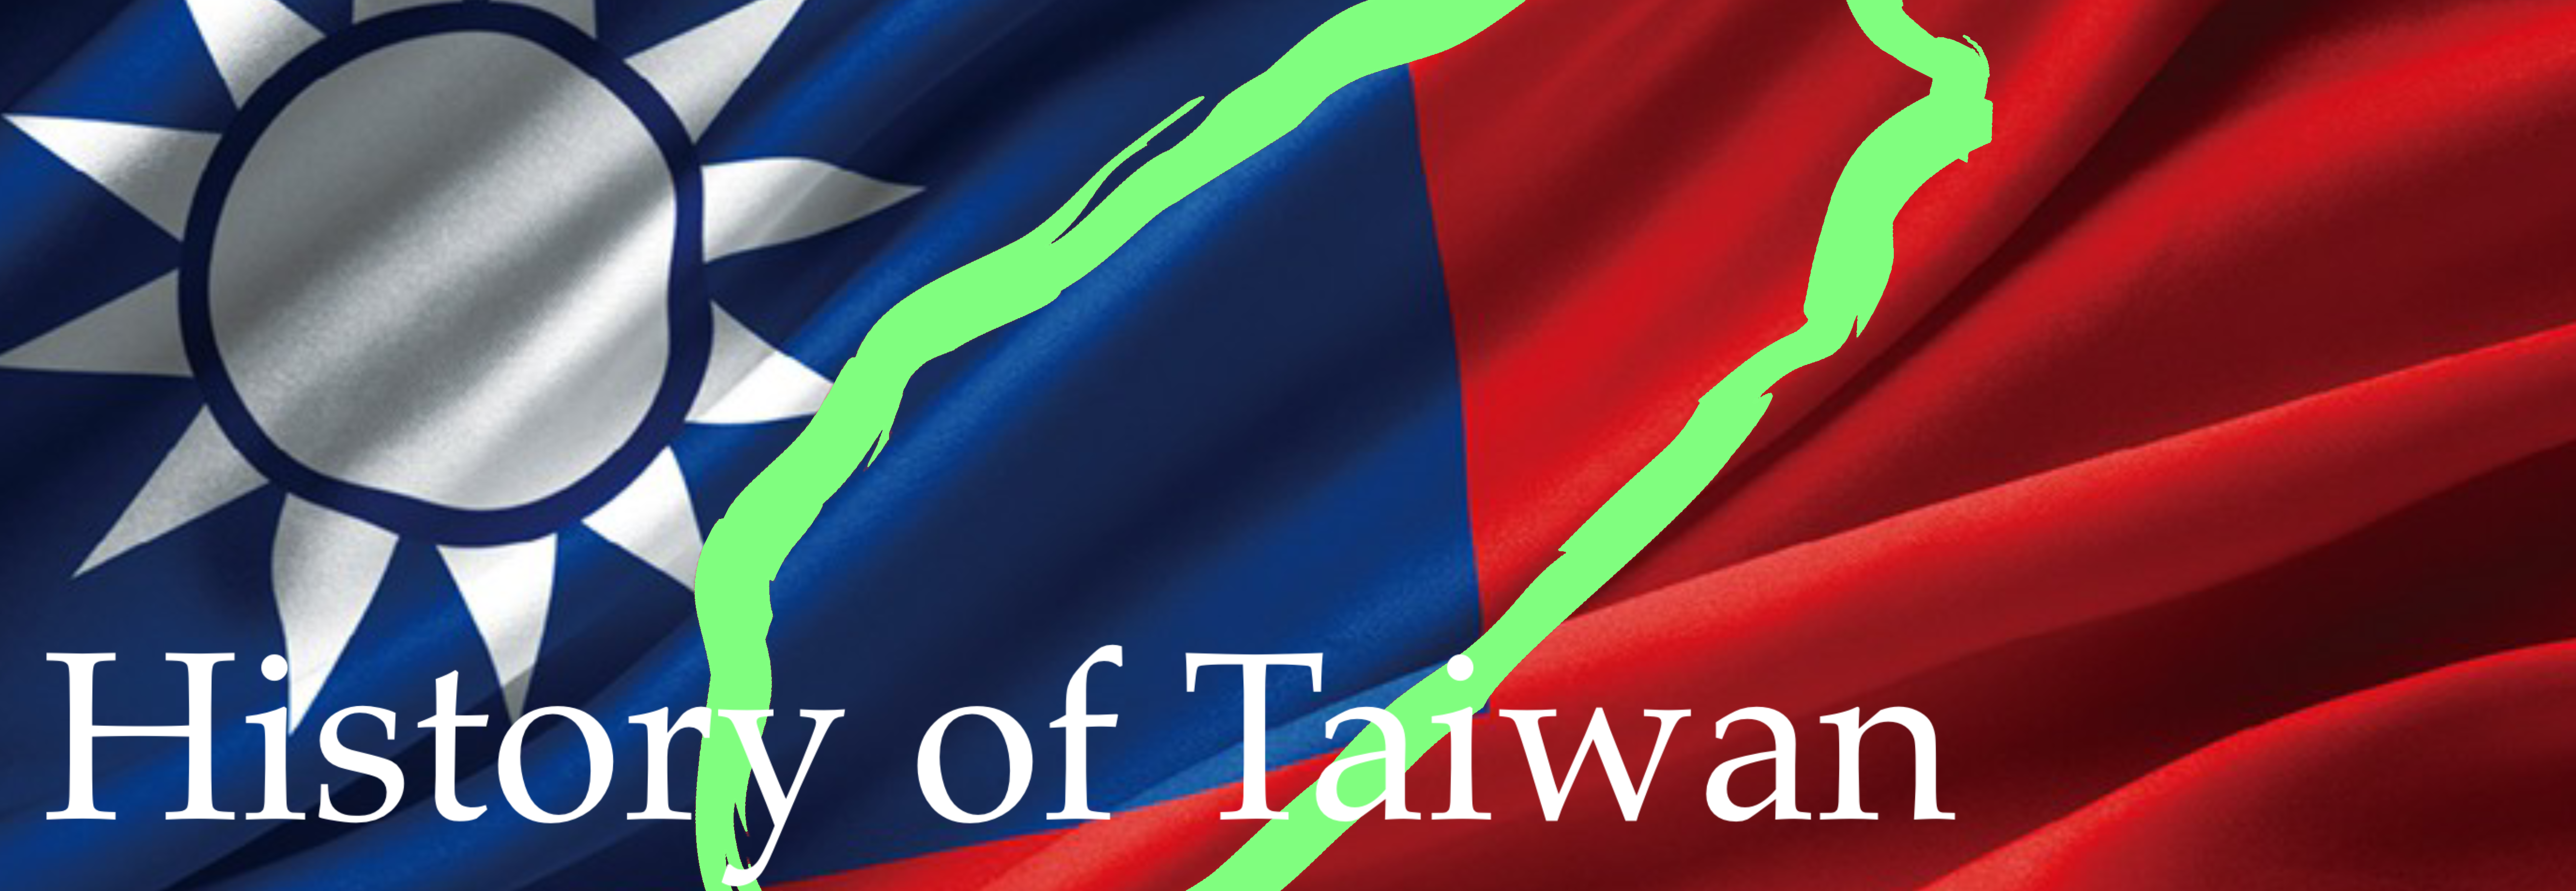 colonization of Taiwan